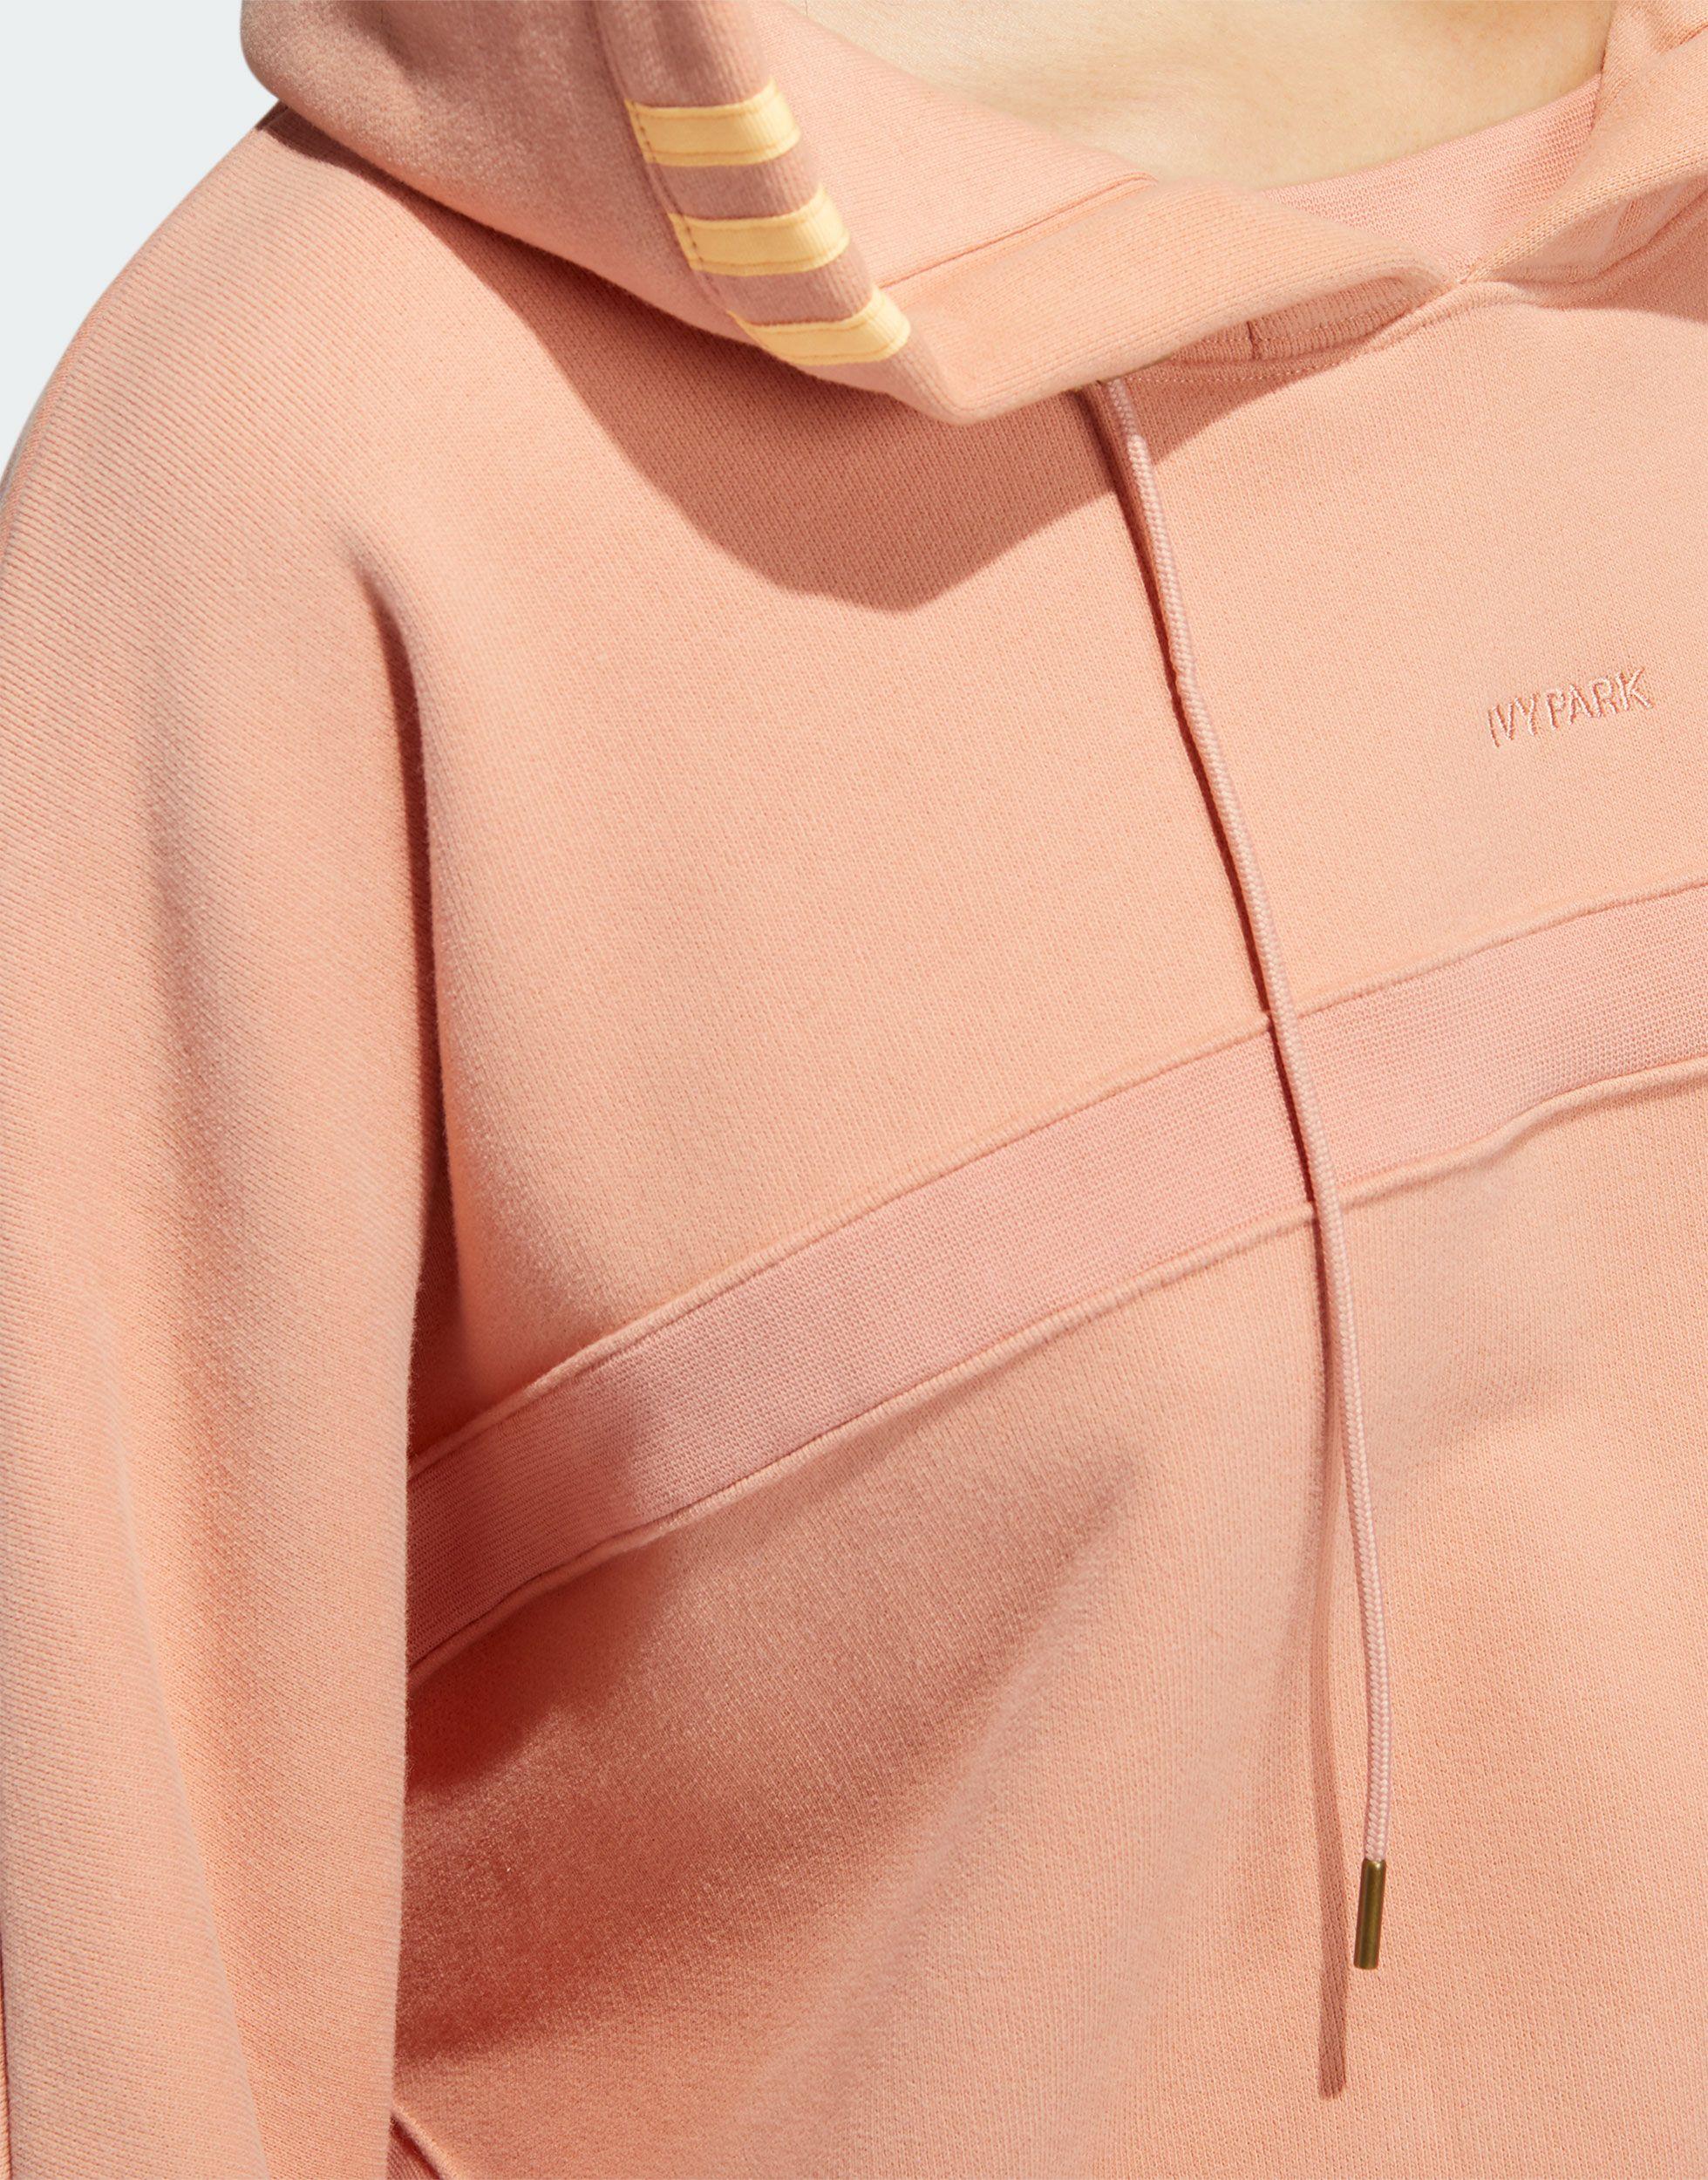 Ivy Park Adidas Originals X Cropped Hoodie in Pink | Lyst